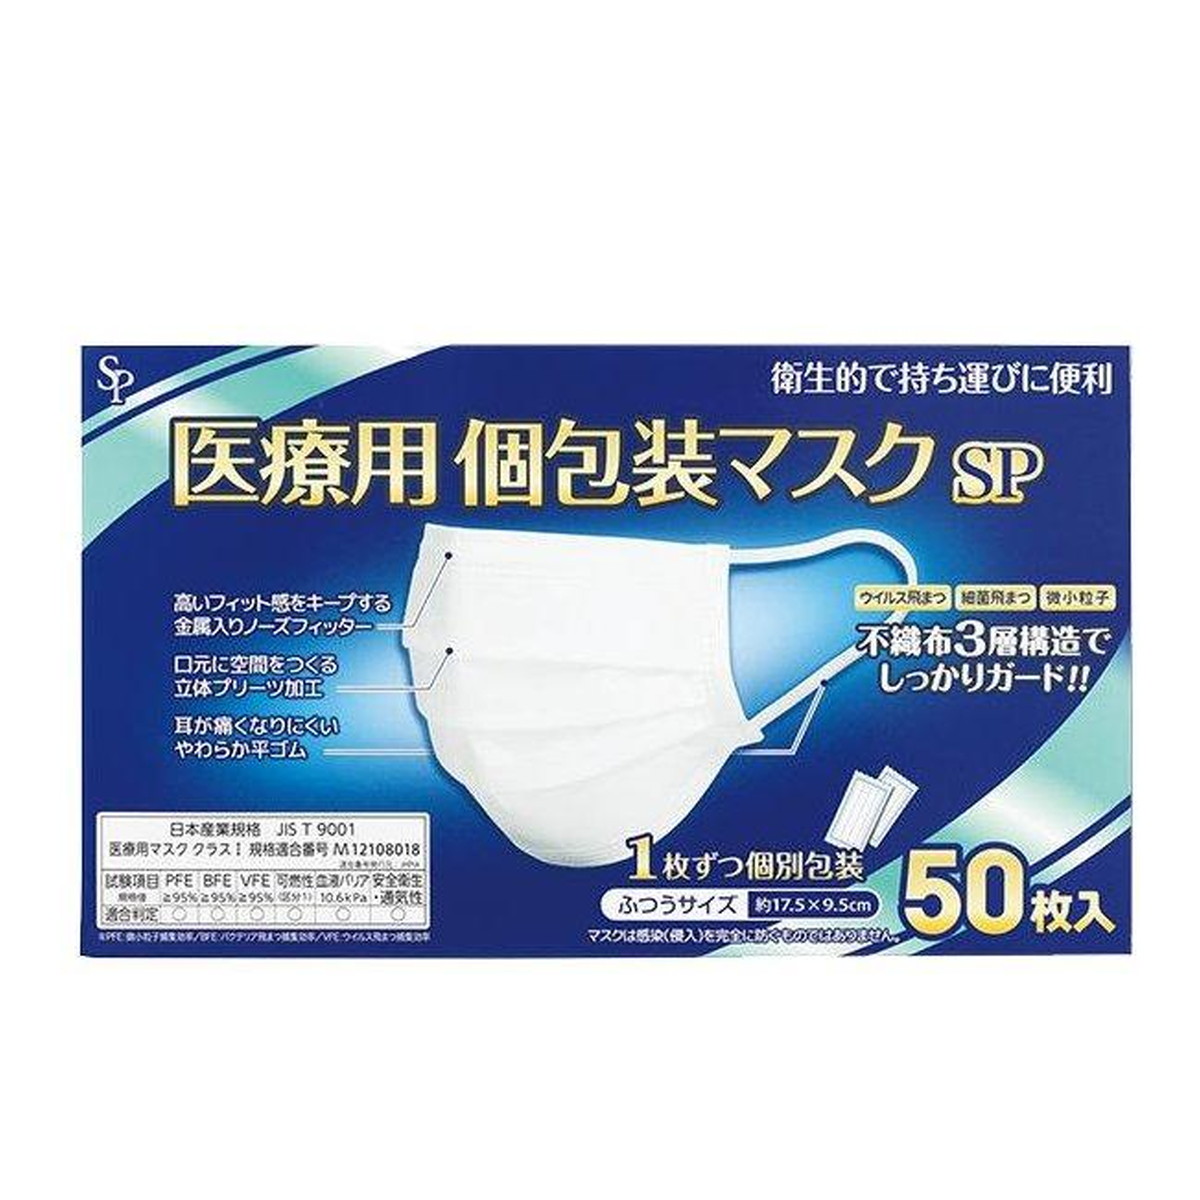 SAIKYO PHARMA サイキョウ・ファーマ 医療用個包装マスク ふつうサイズ 50枚入 × 1個 衛生用品マスクの商品画像